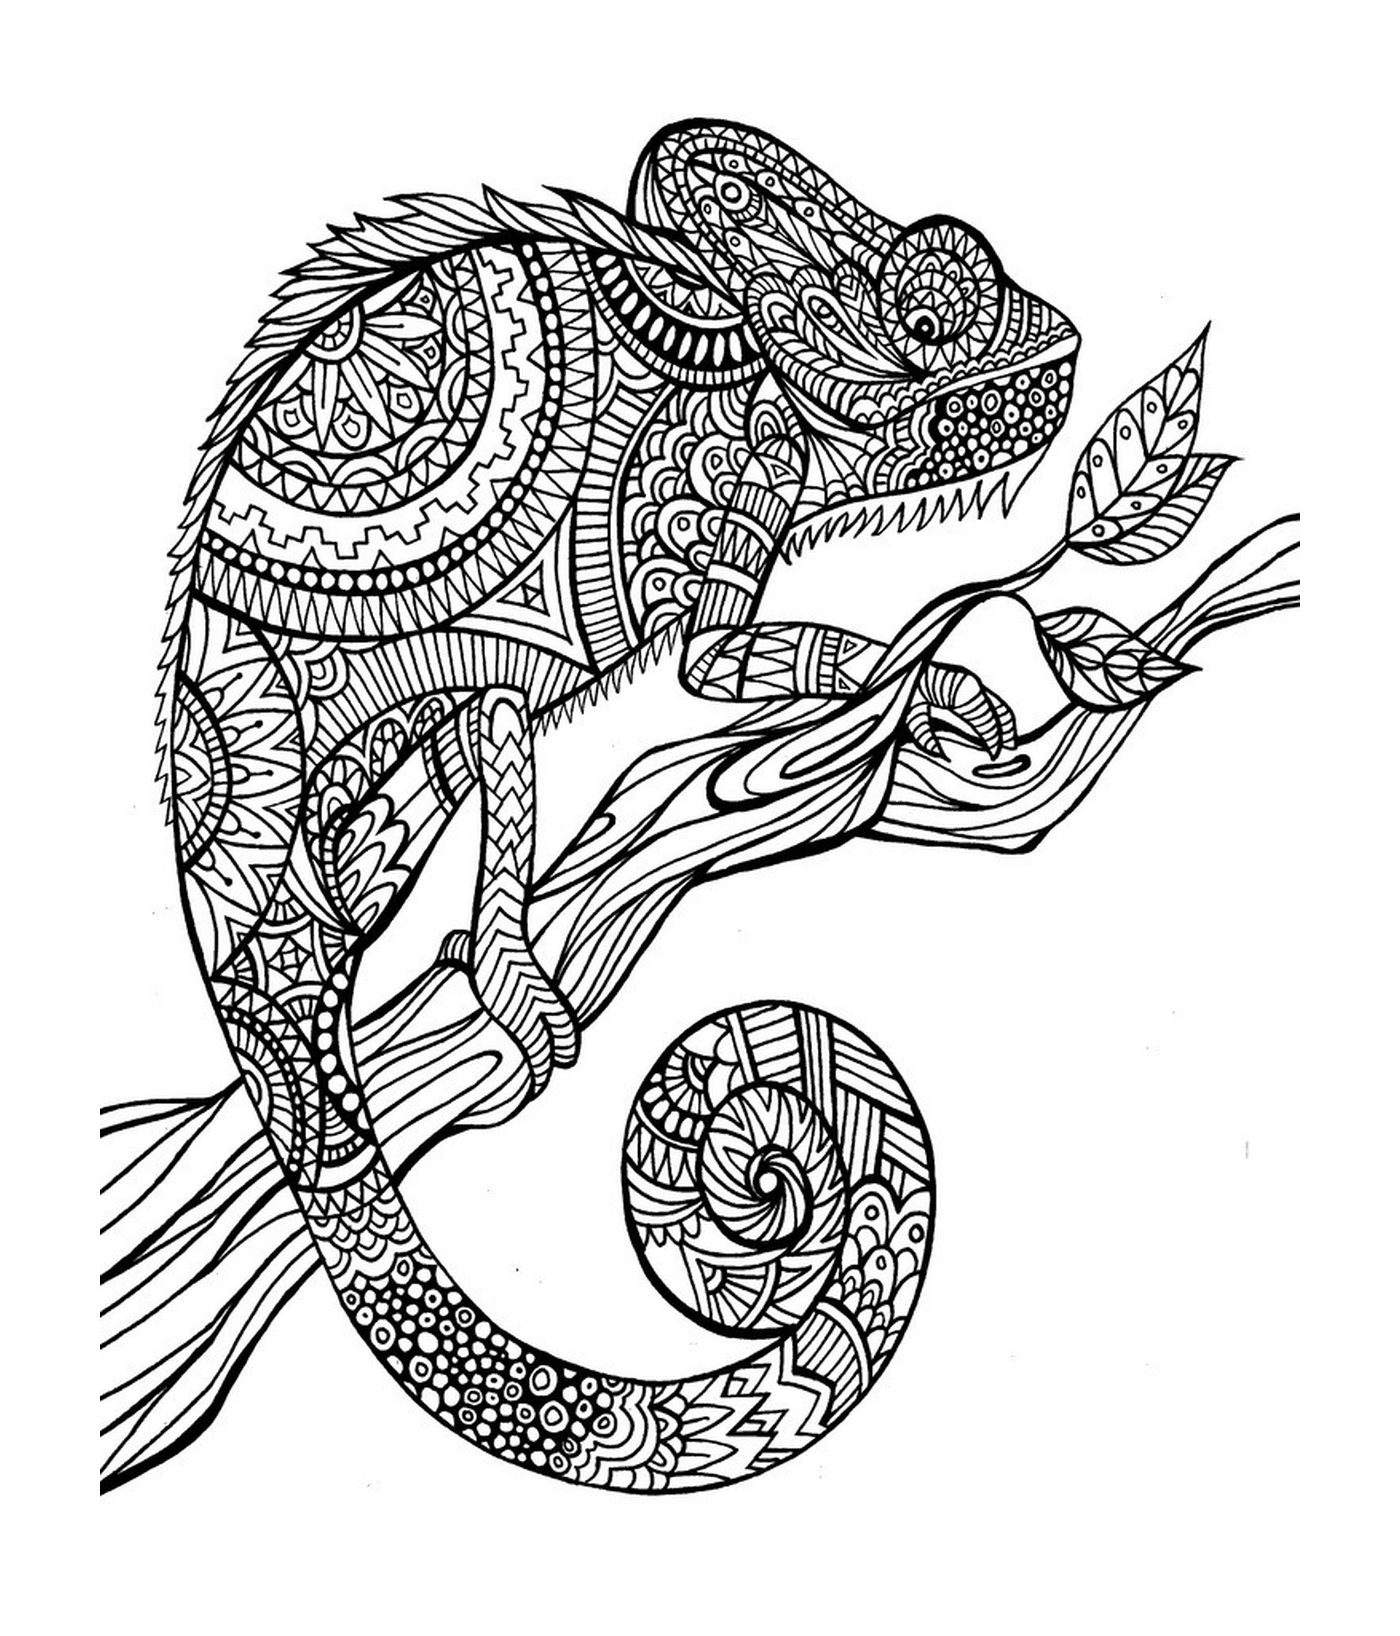  Un camaleonte seduto su un ramo 